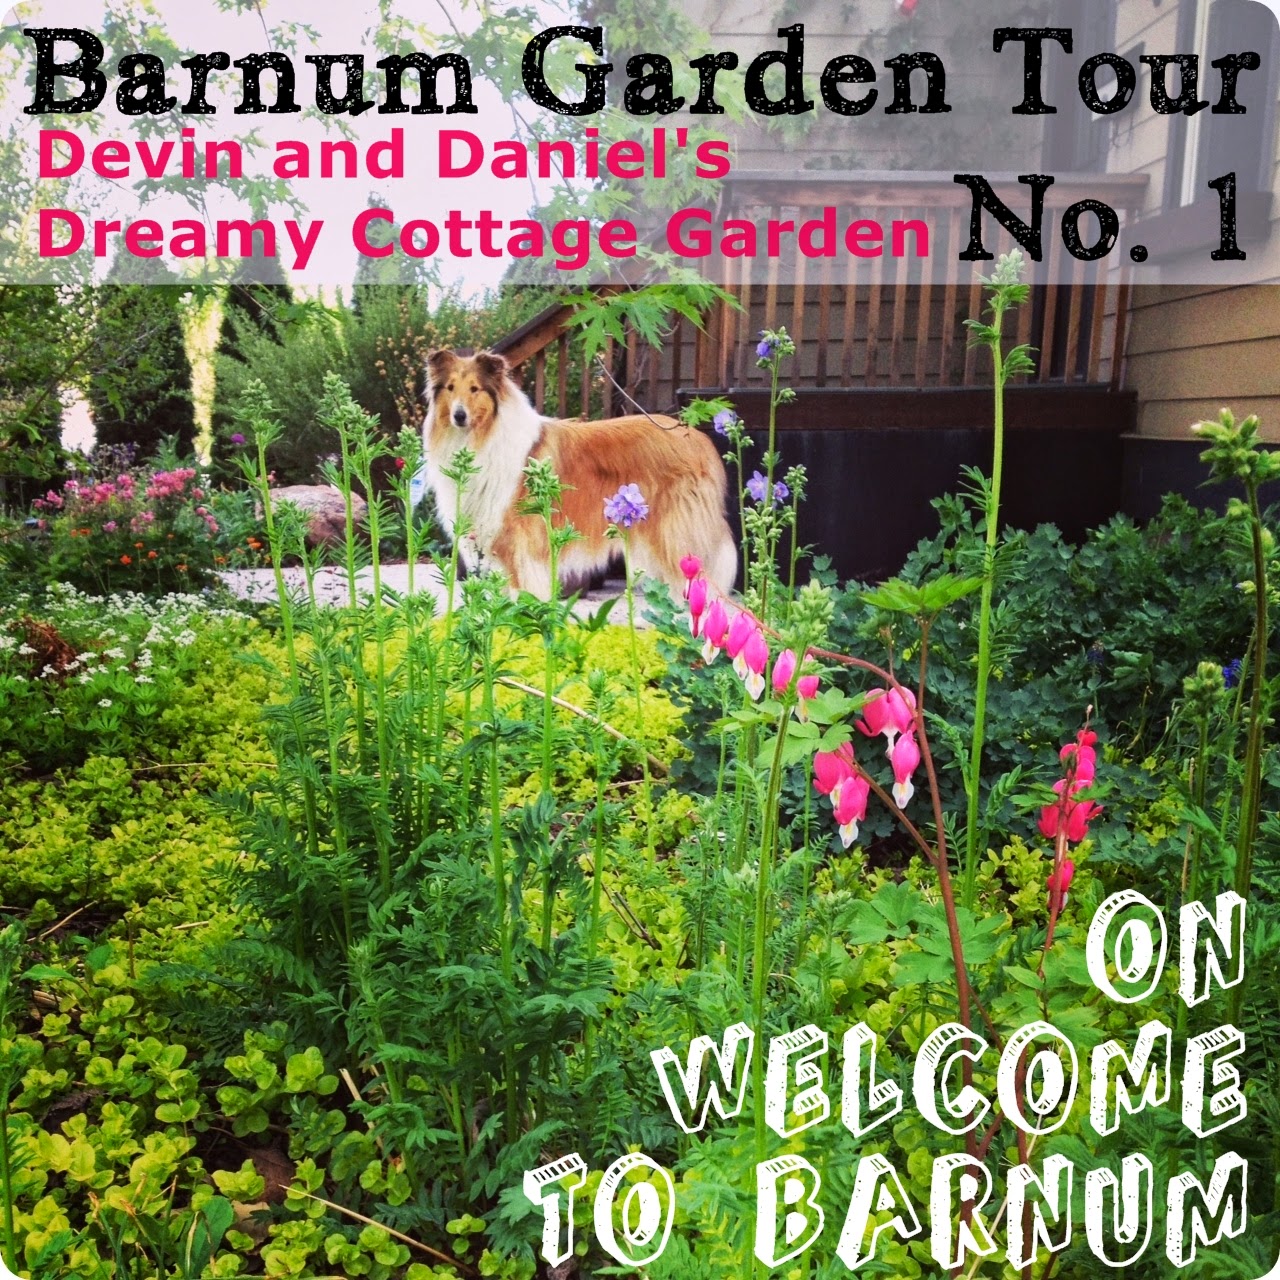 http://welcometobarnum.blogspot.com/2014/06/barnum-garden-tour-devin-and-daniels.html